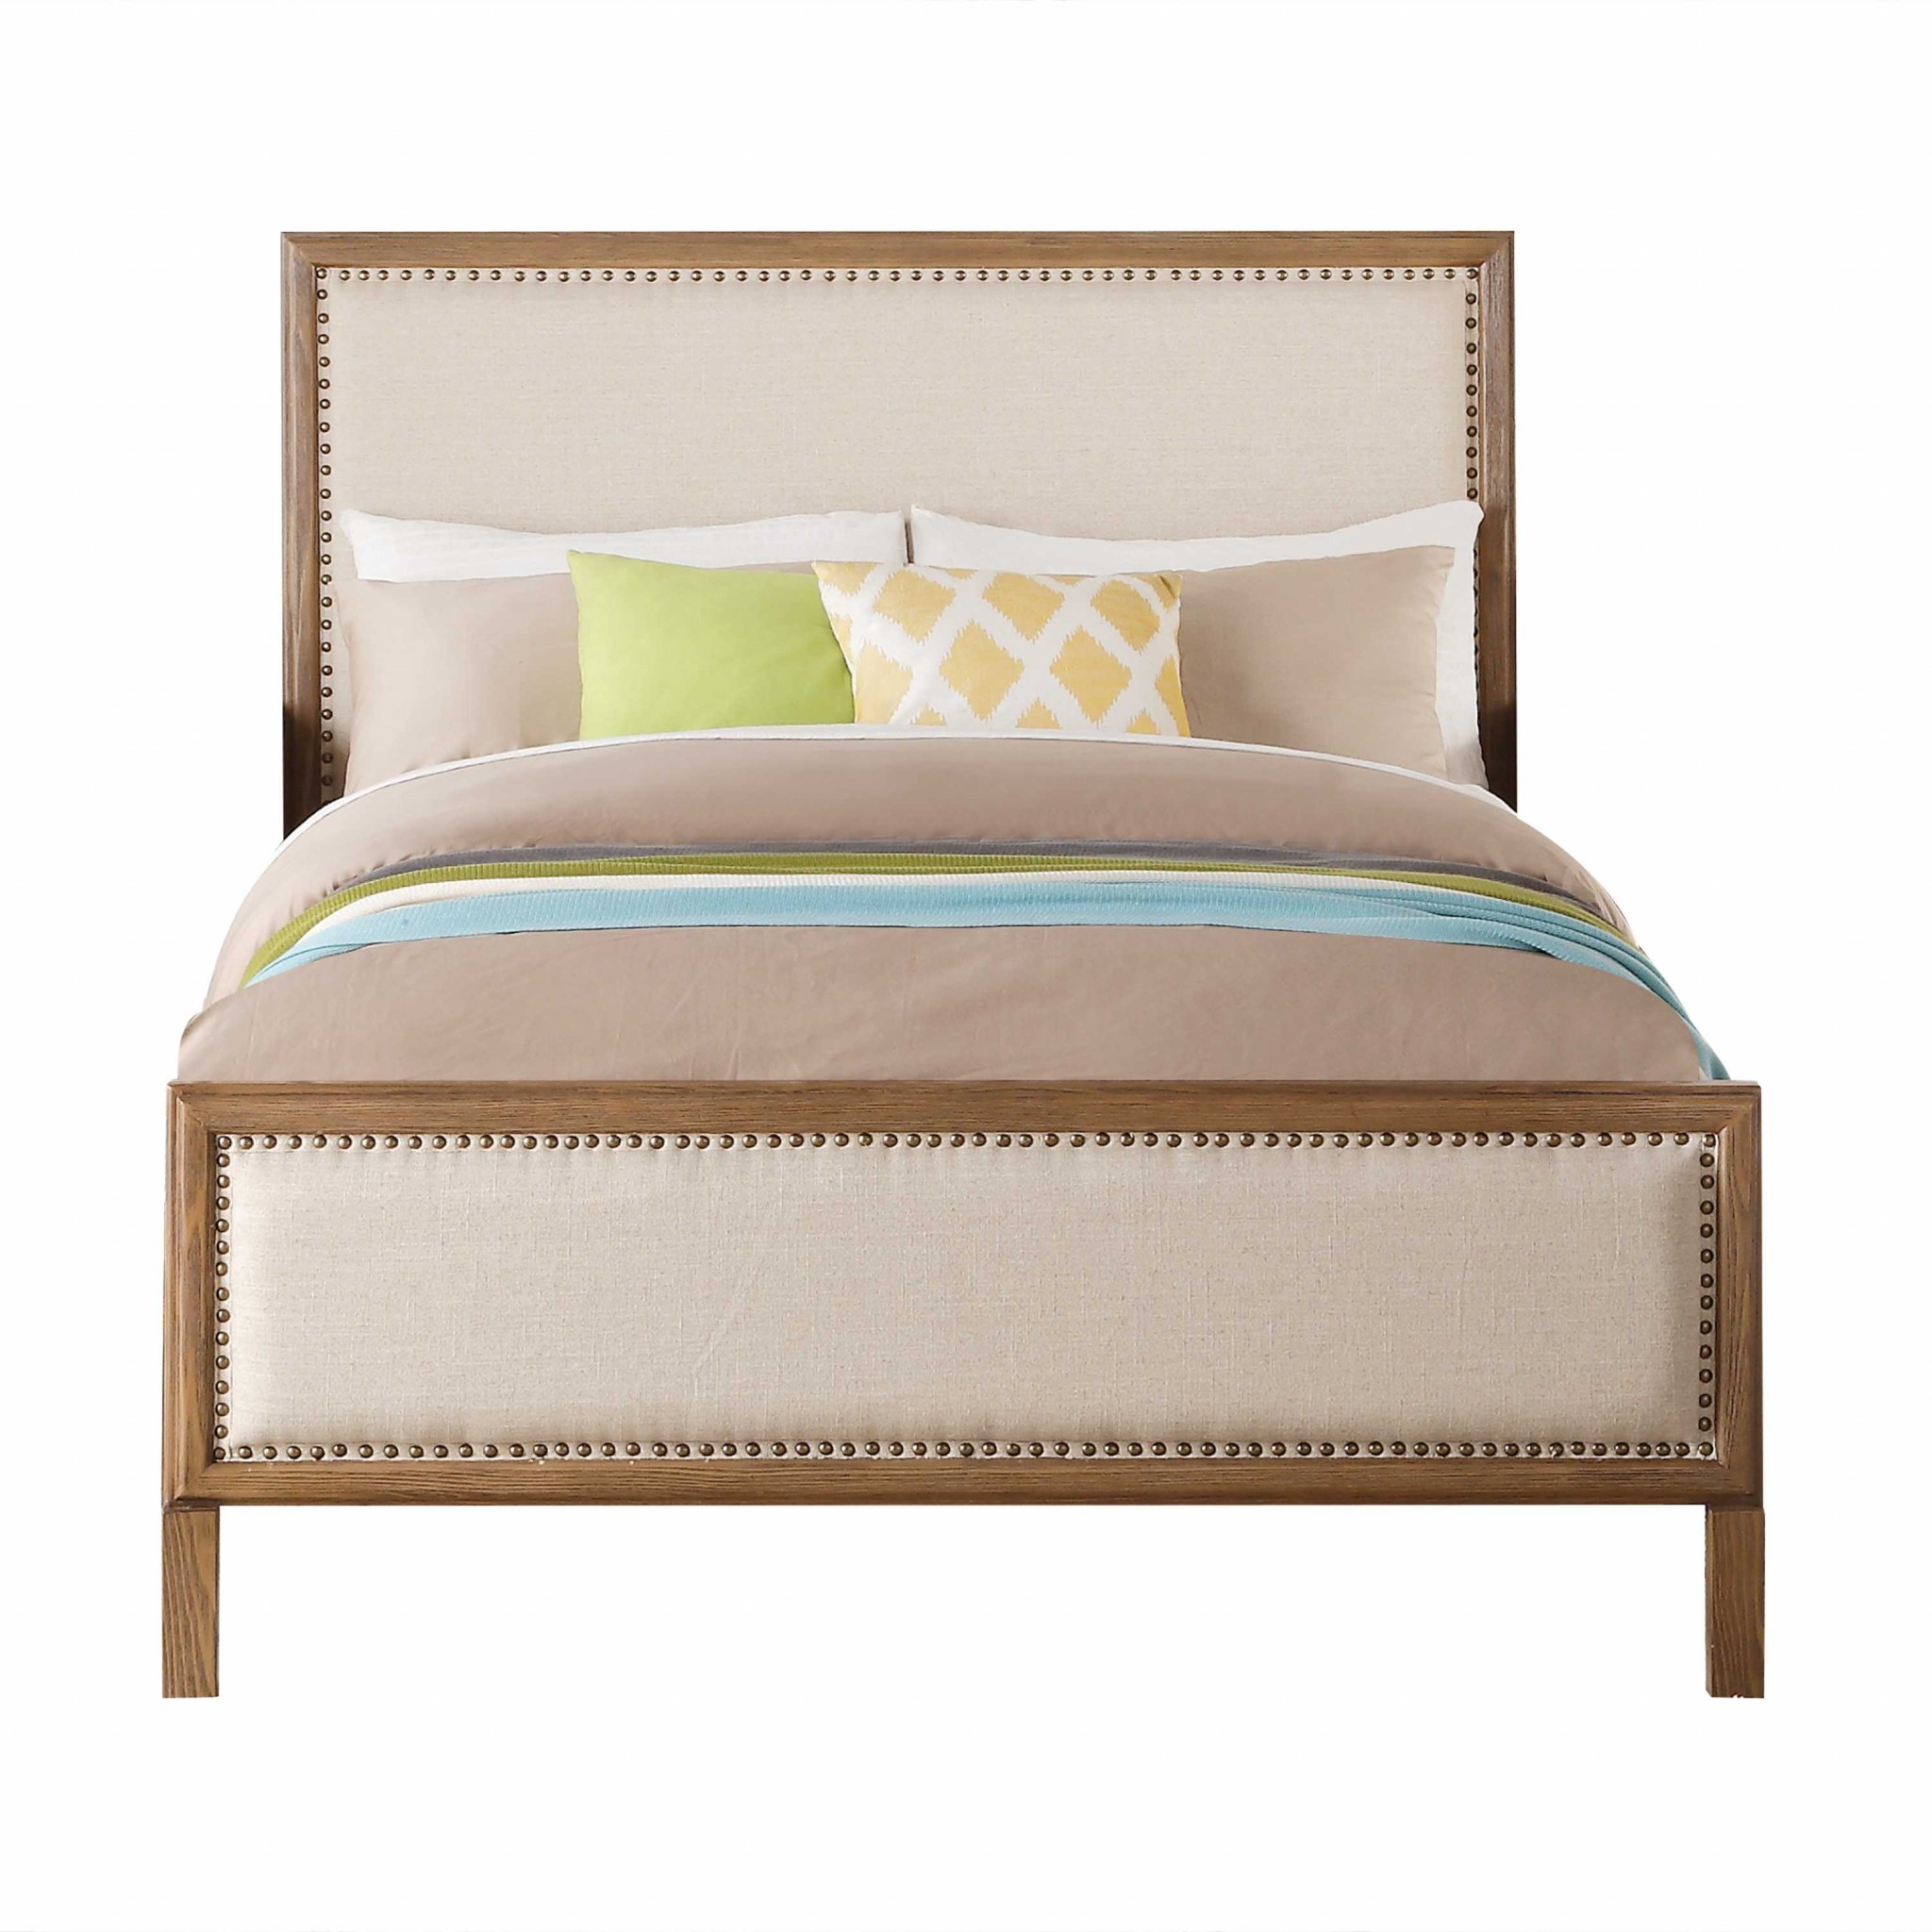 57" X 80" X 53" Beige Linen Reclaimed Oak Wood Upholstery Full Bed